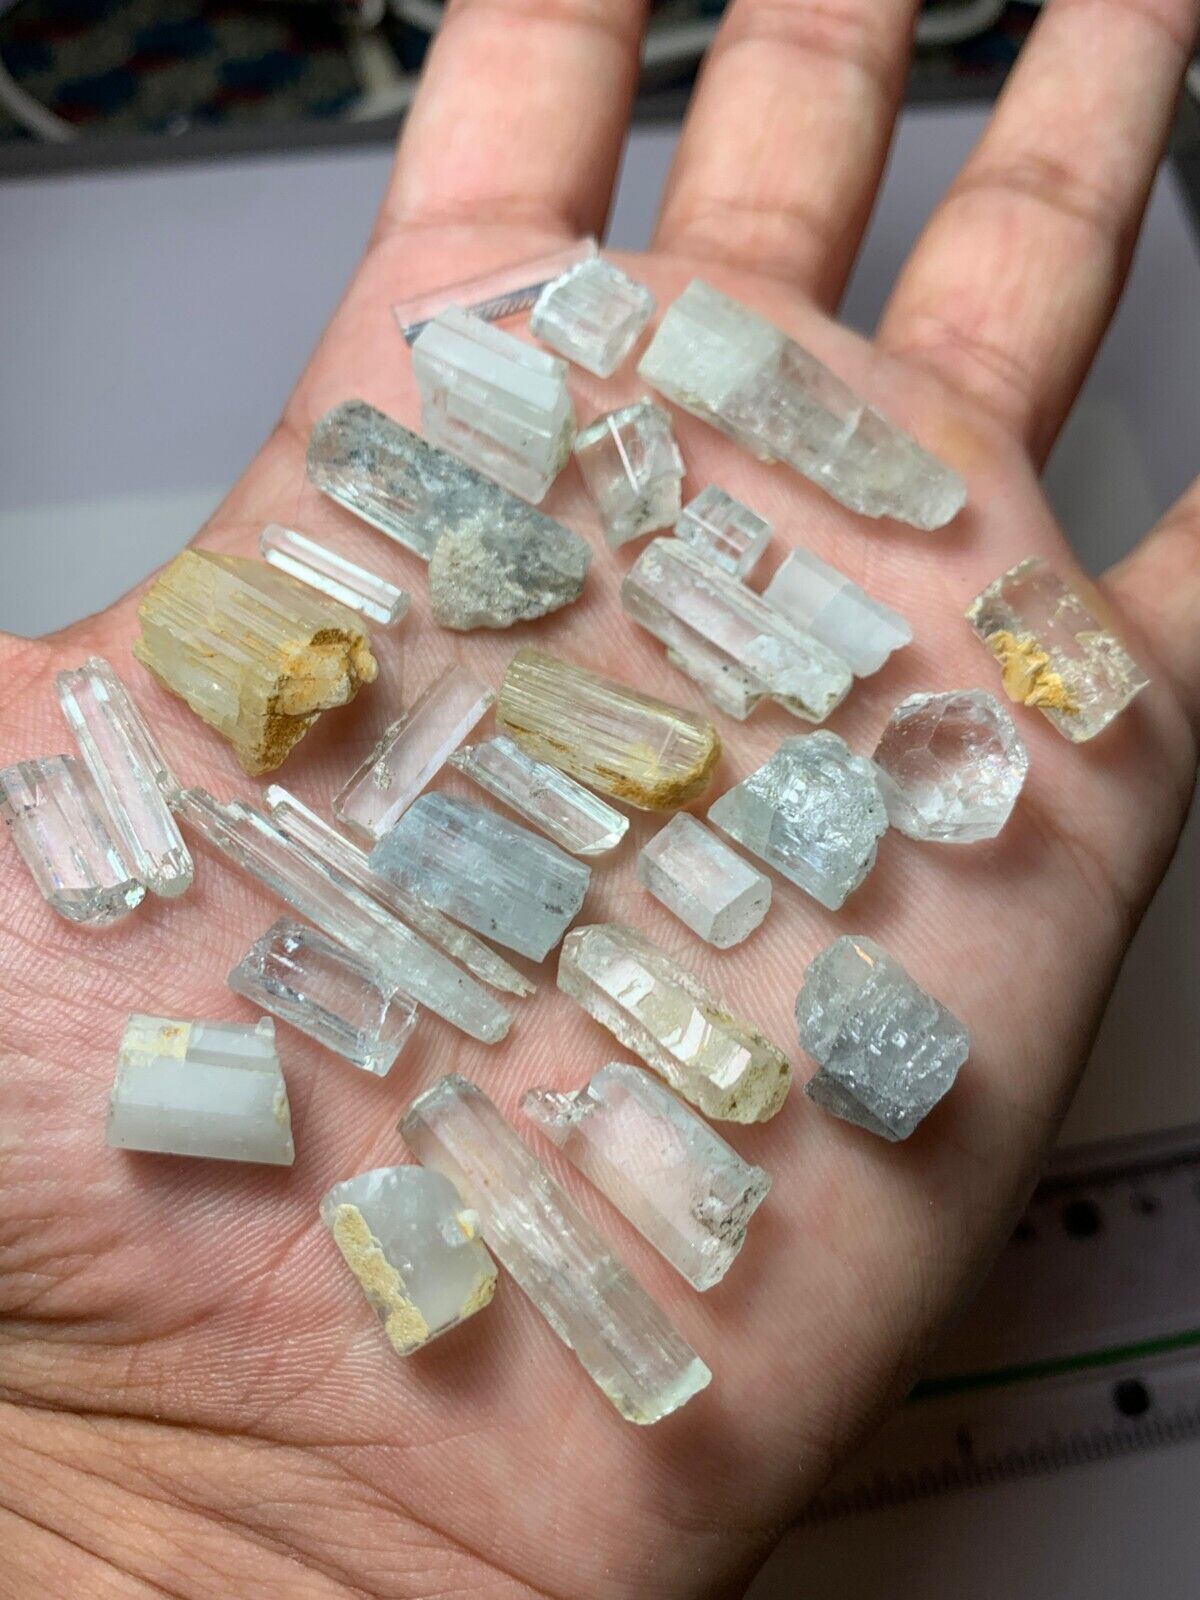 43gram Beautiful Clear Aquamarine Rough Crystals Lot From Skardu, Pakistan 🇵🇰